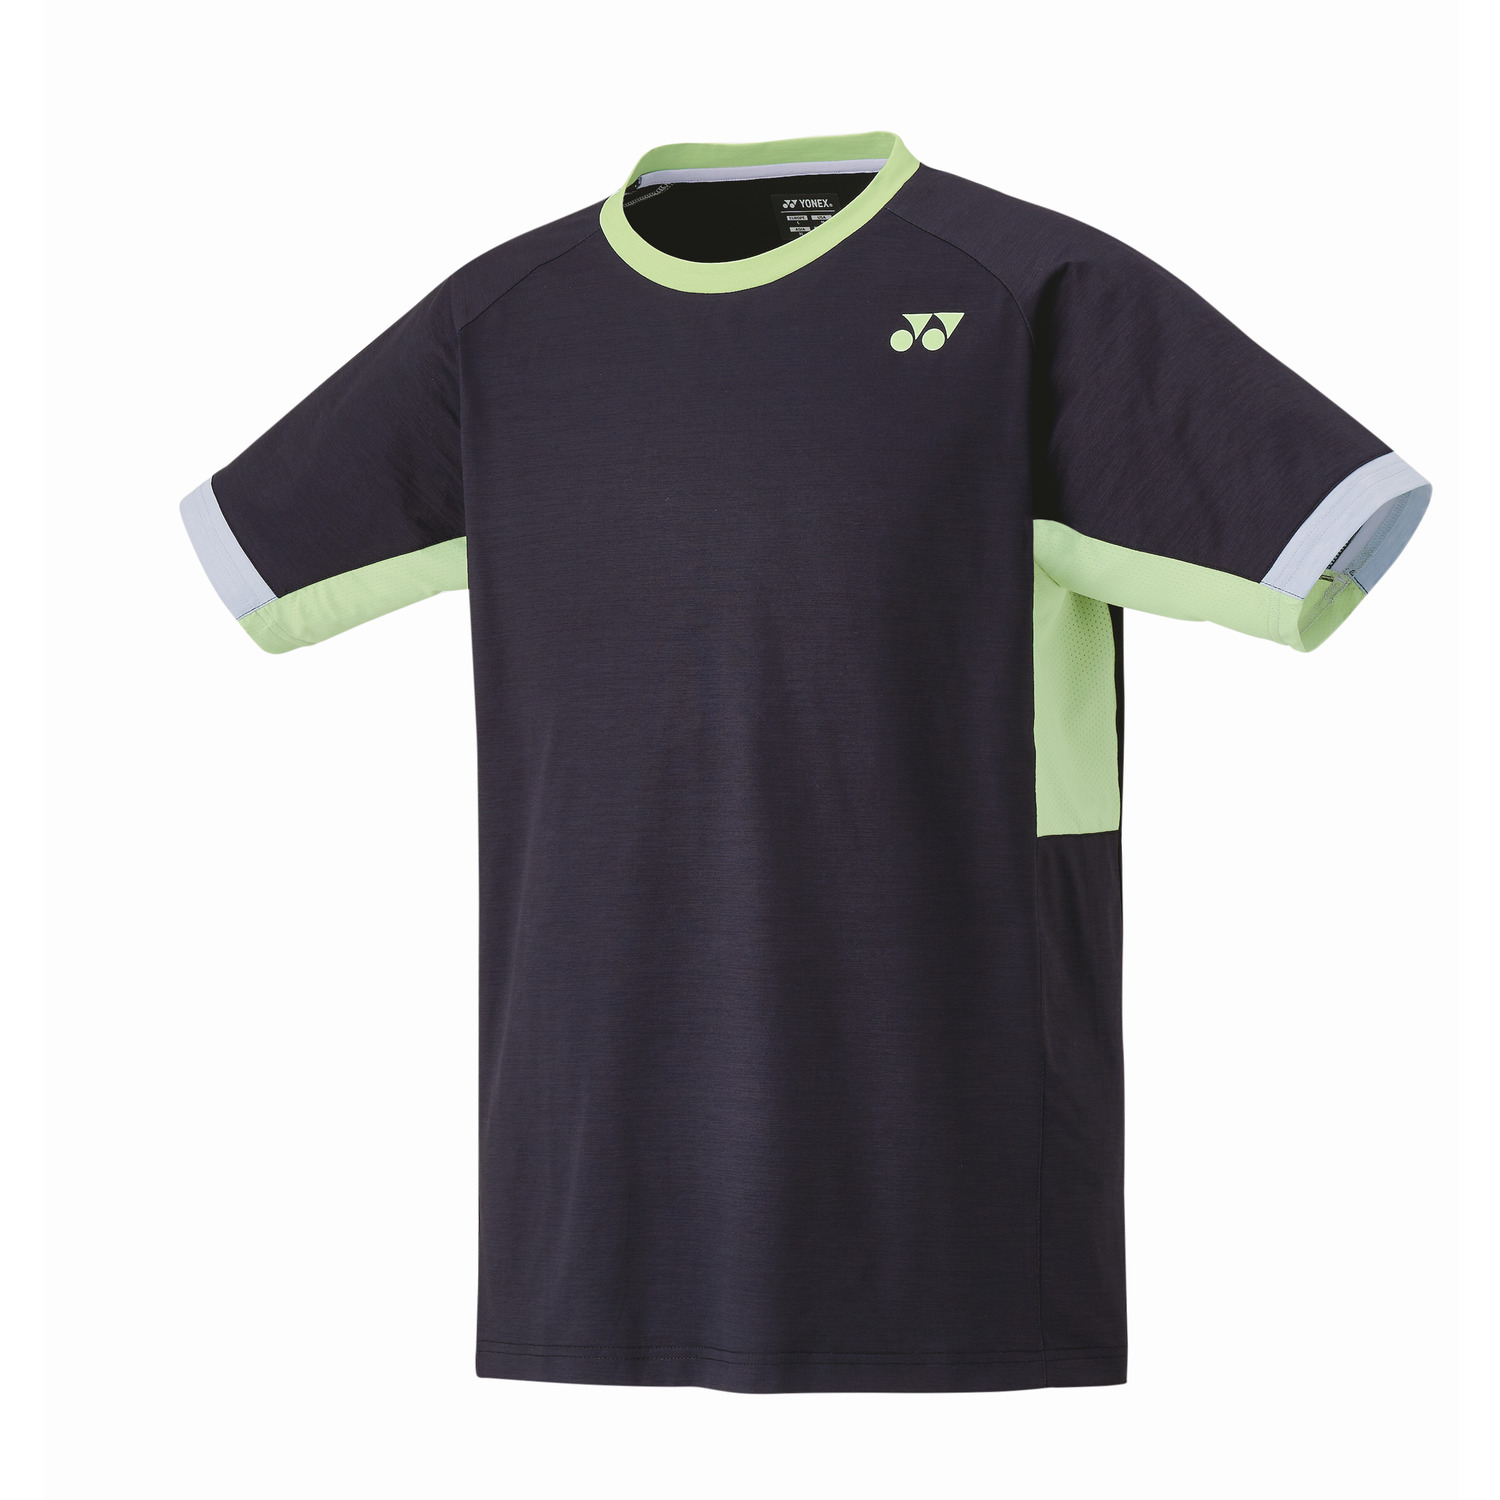 Yonex Premium Badminton/ Sports Shirt 10563 Black MEN'S